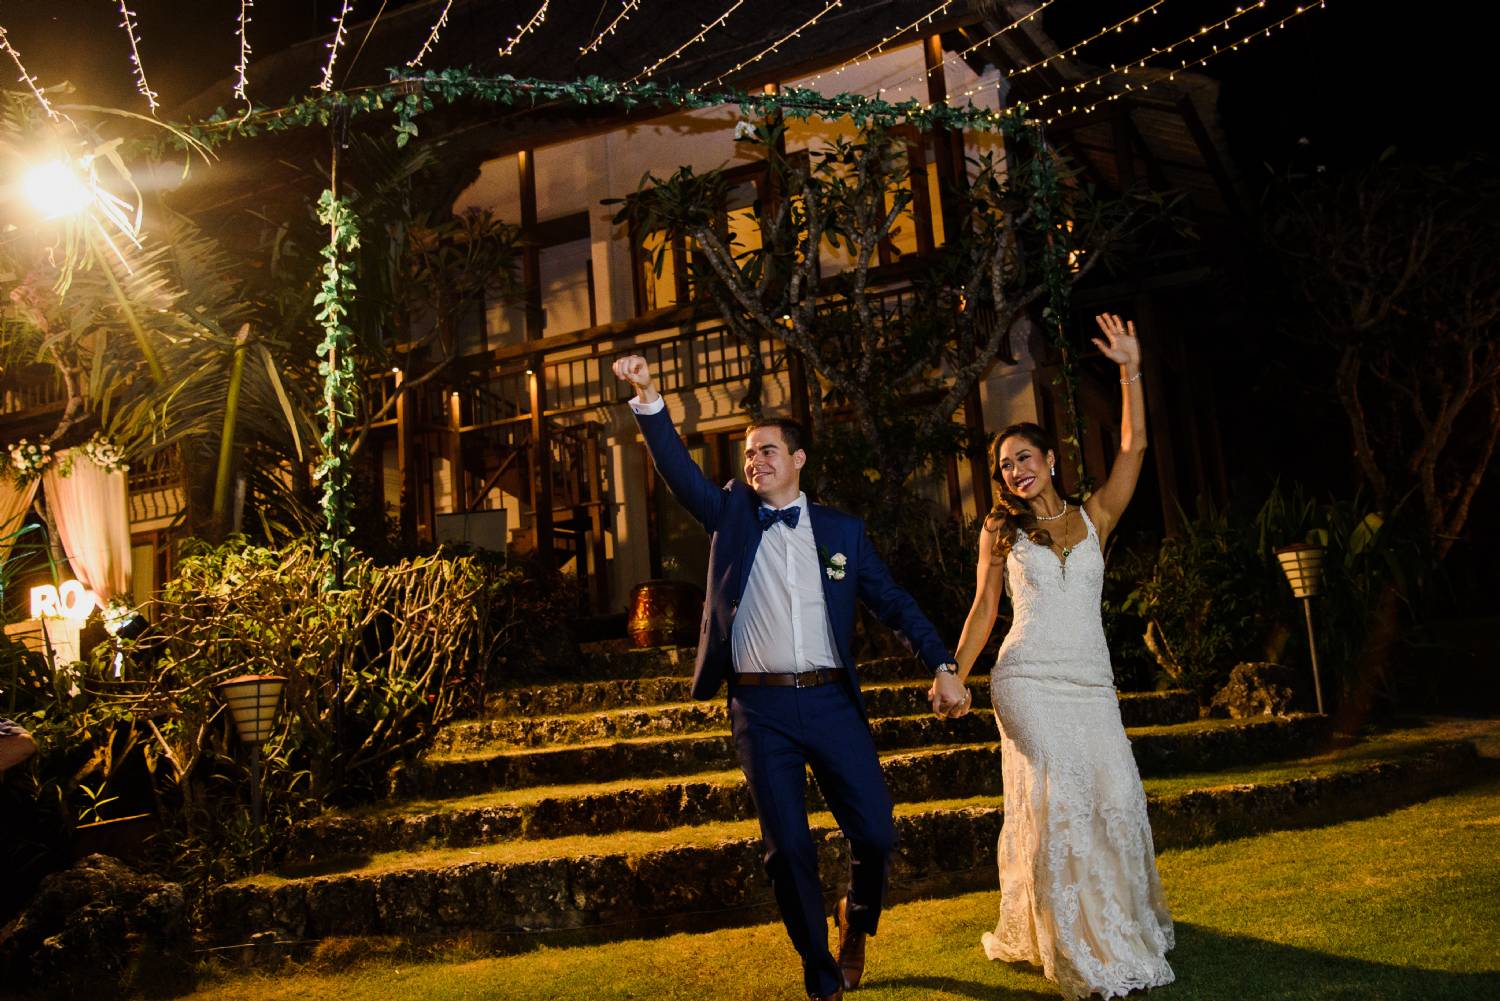 Rachel & Omid gorgeous vintage-rustic wedding at beautiful villa in Bali 11